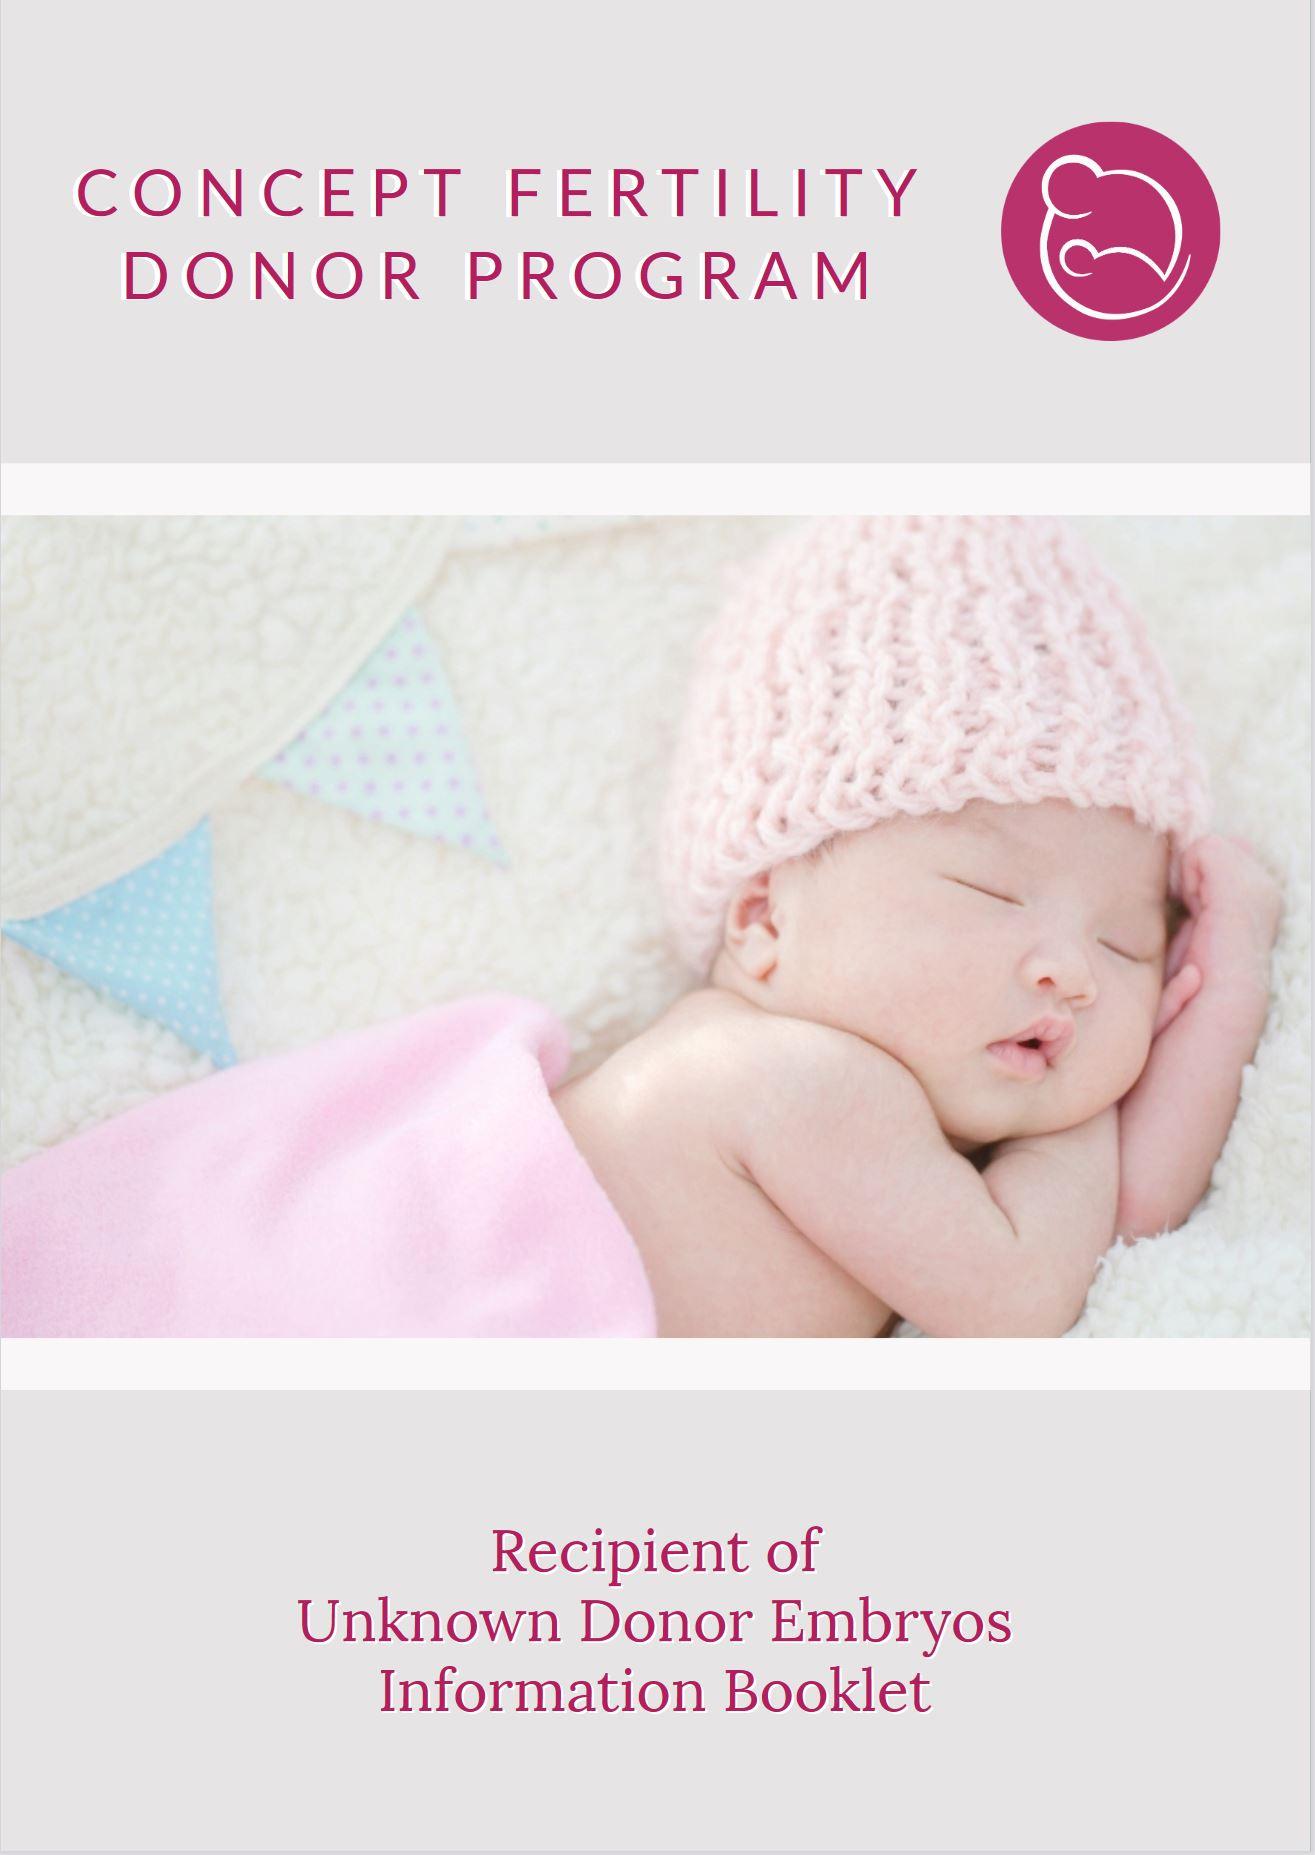 Recipient of unknown donor embryos information booklet